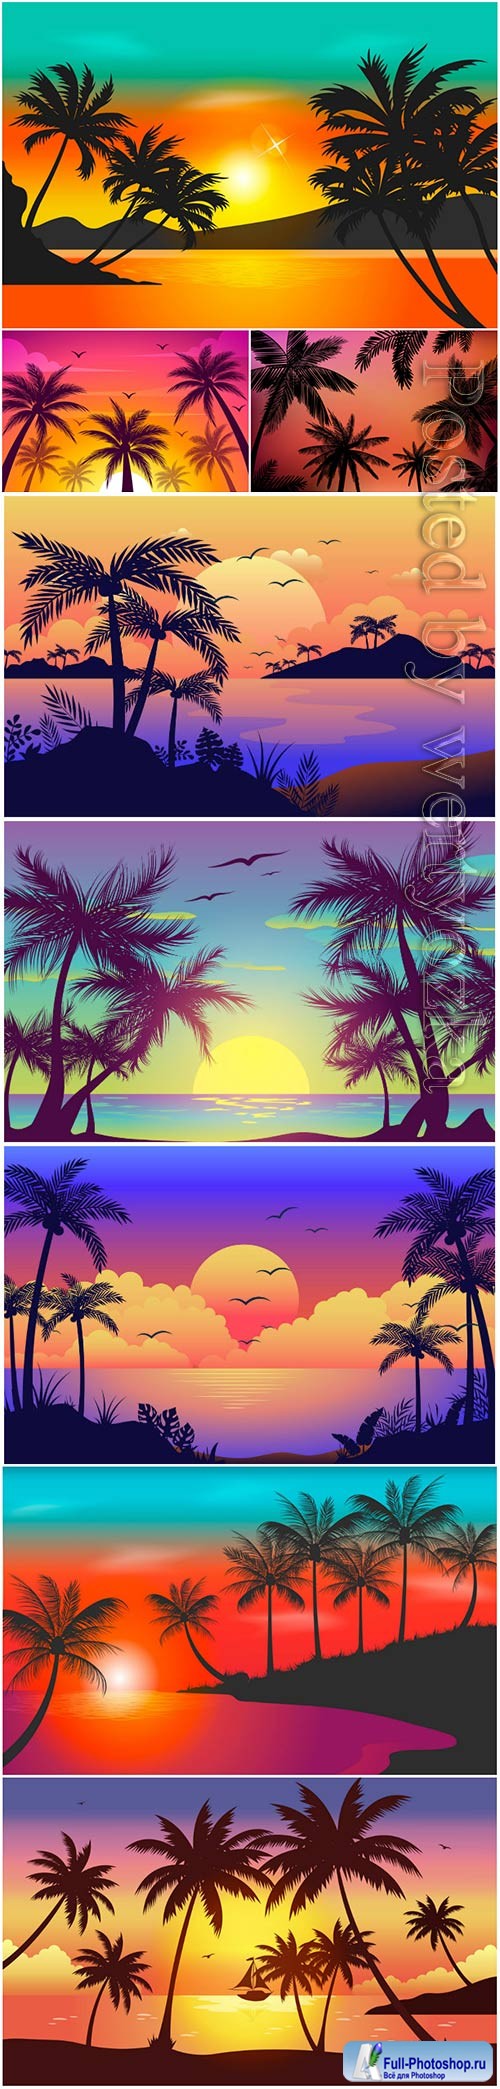 Colorful palm silhouettes wallpaper concept vector design